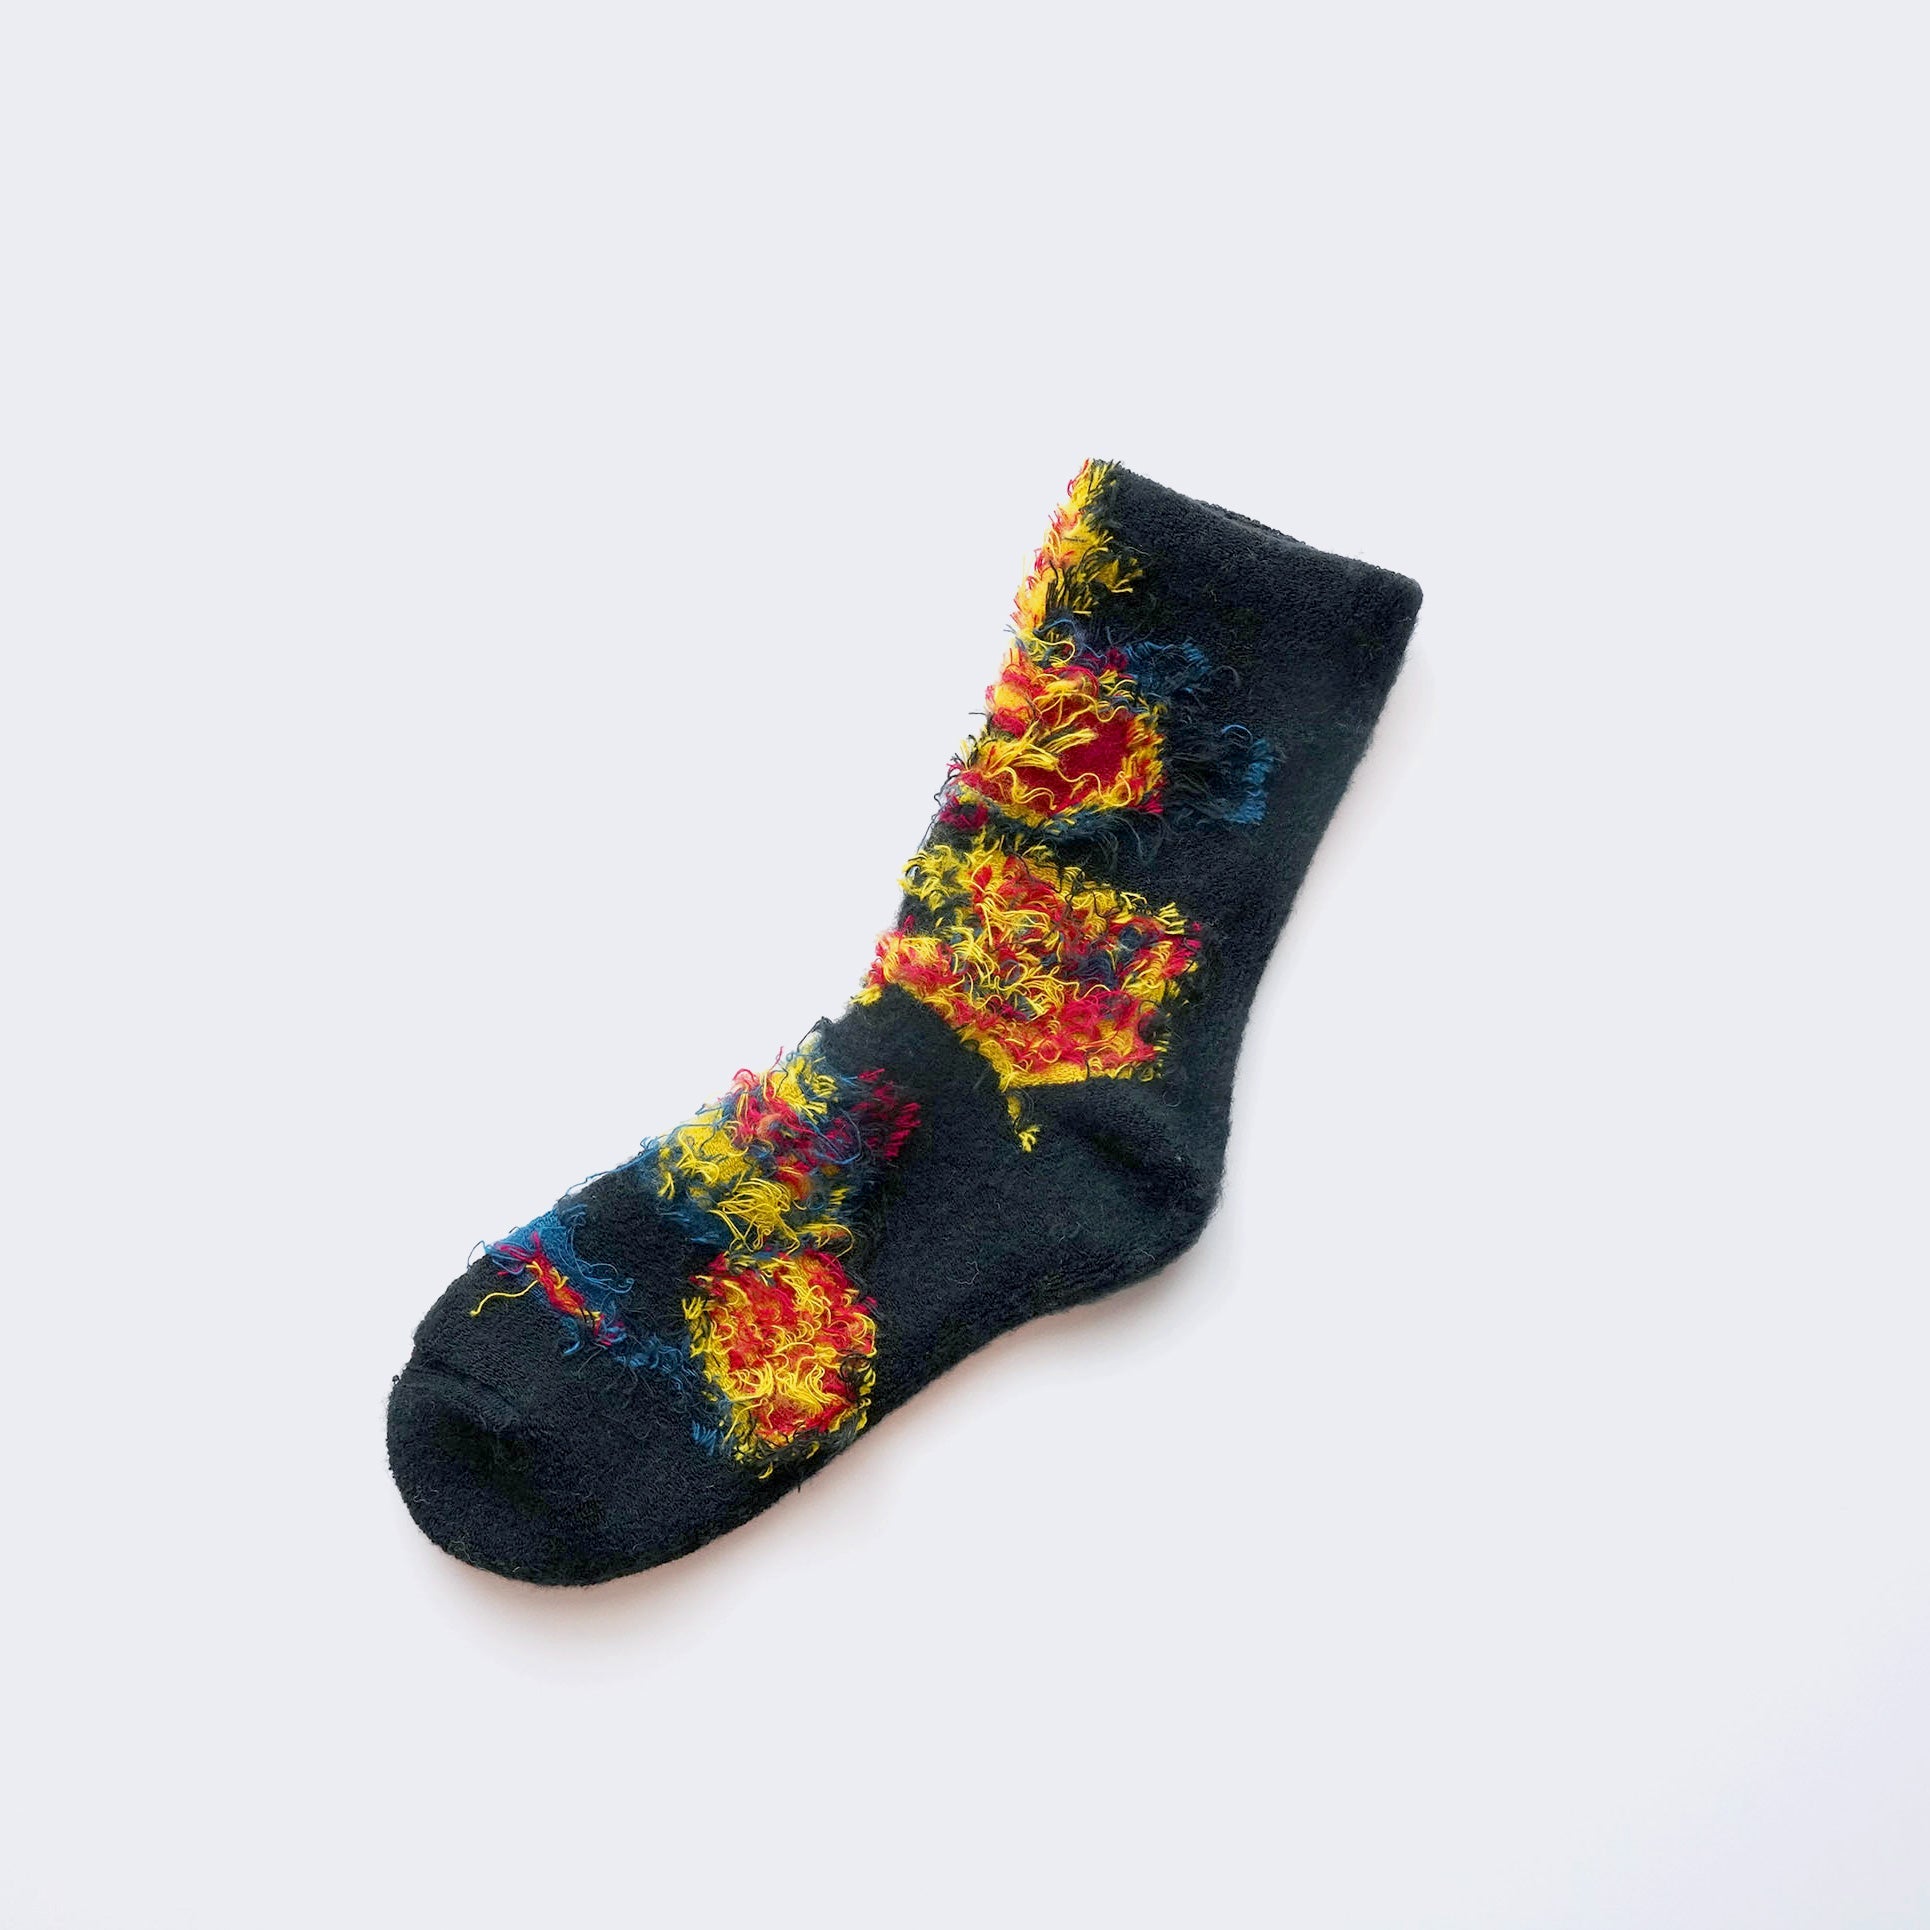 ROSE-rich terry socks